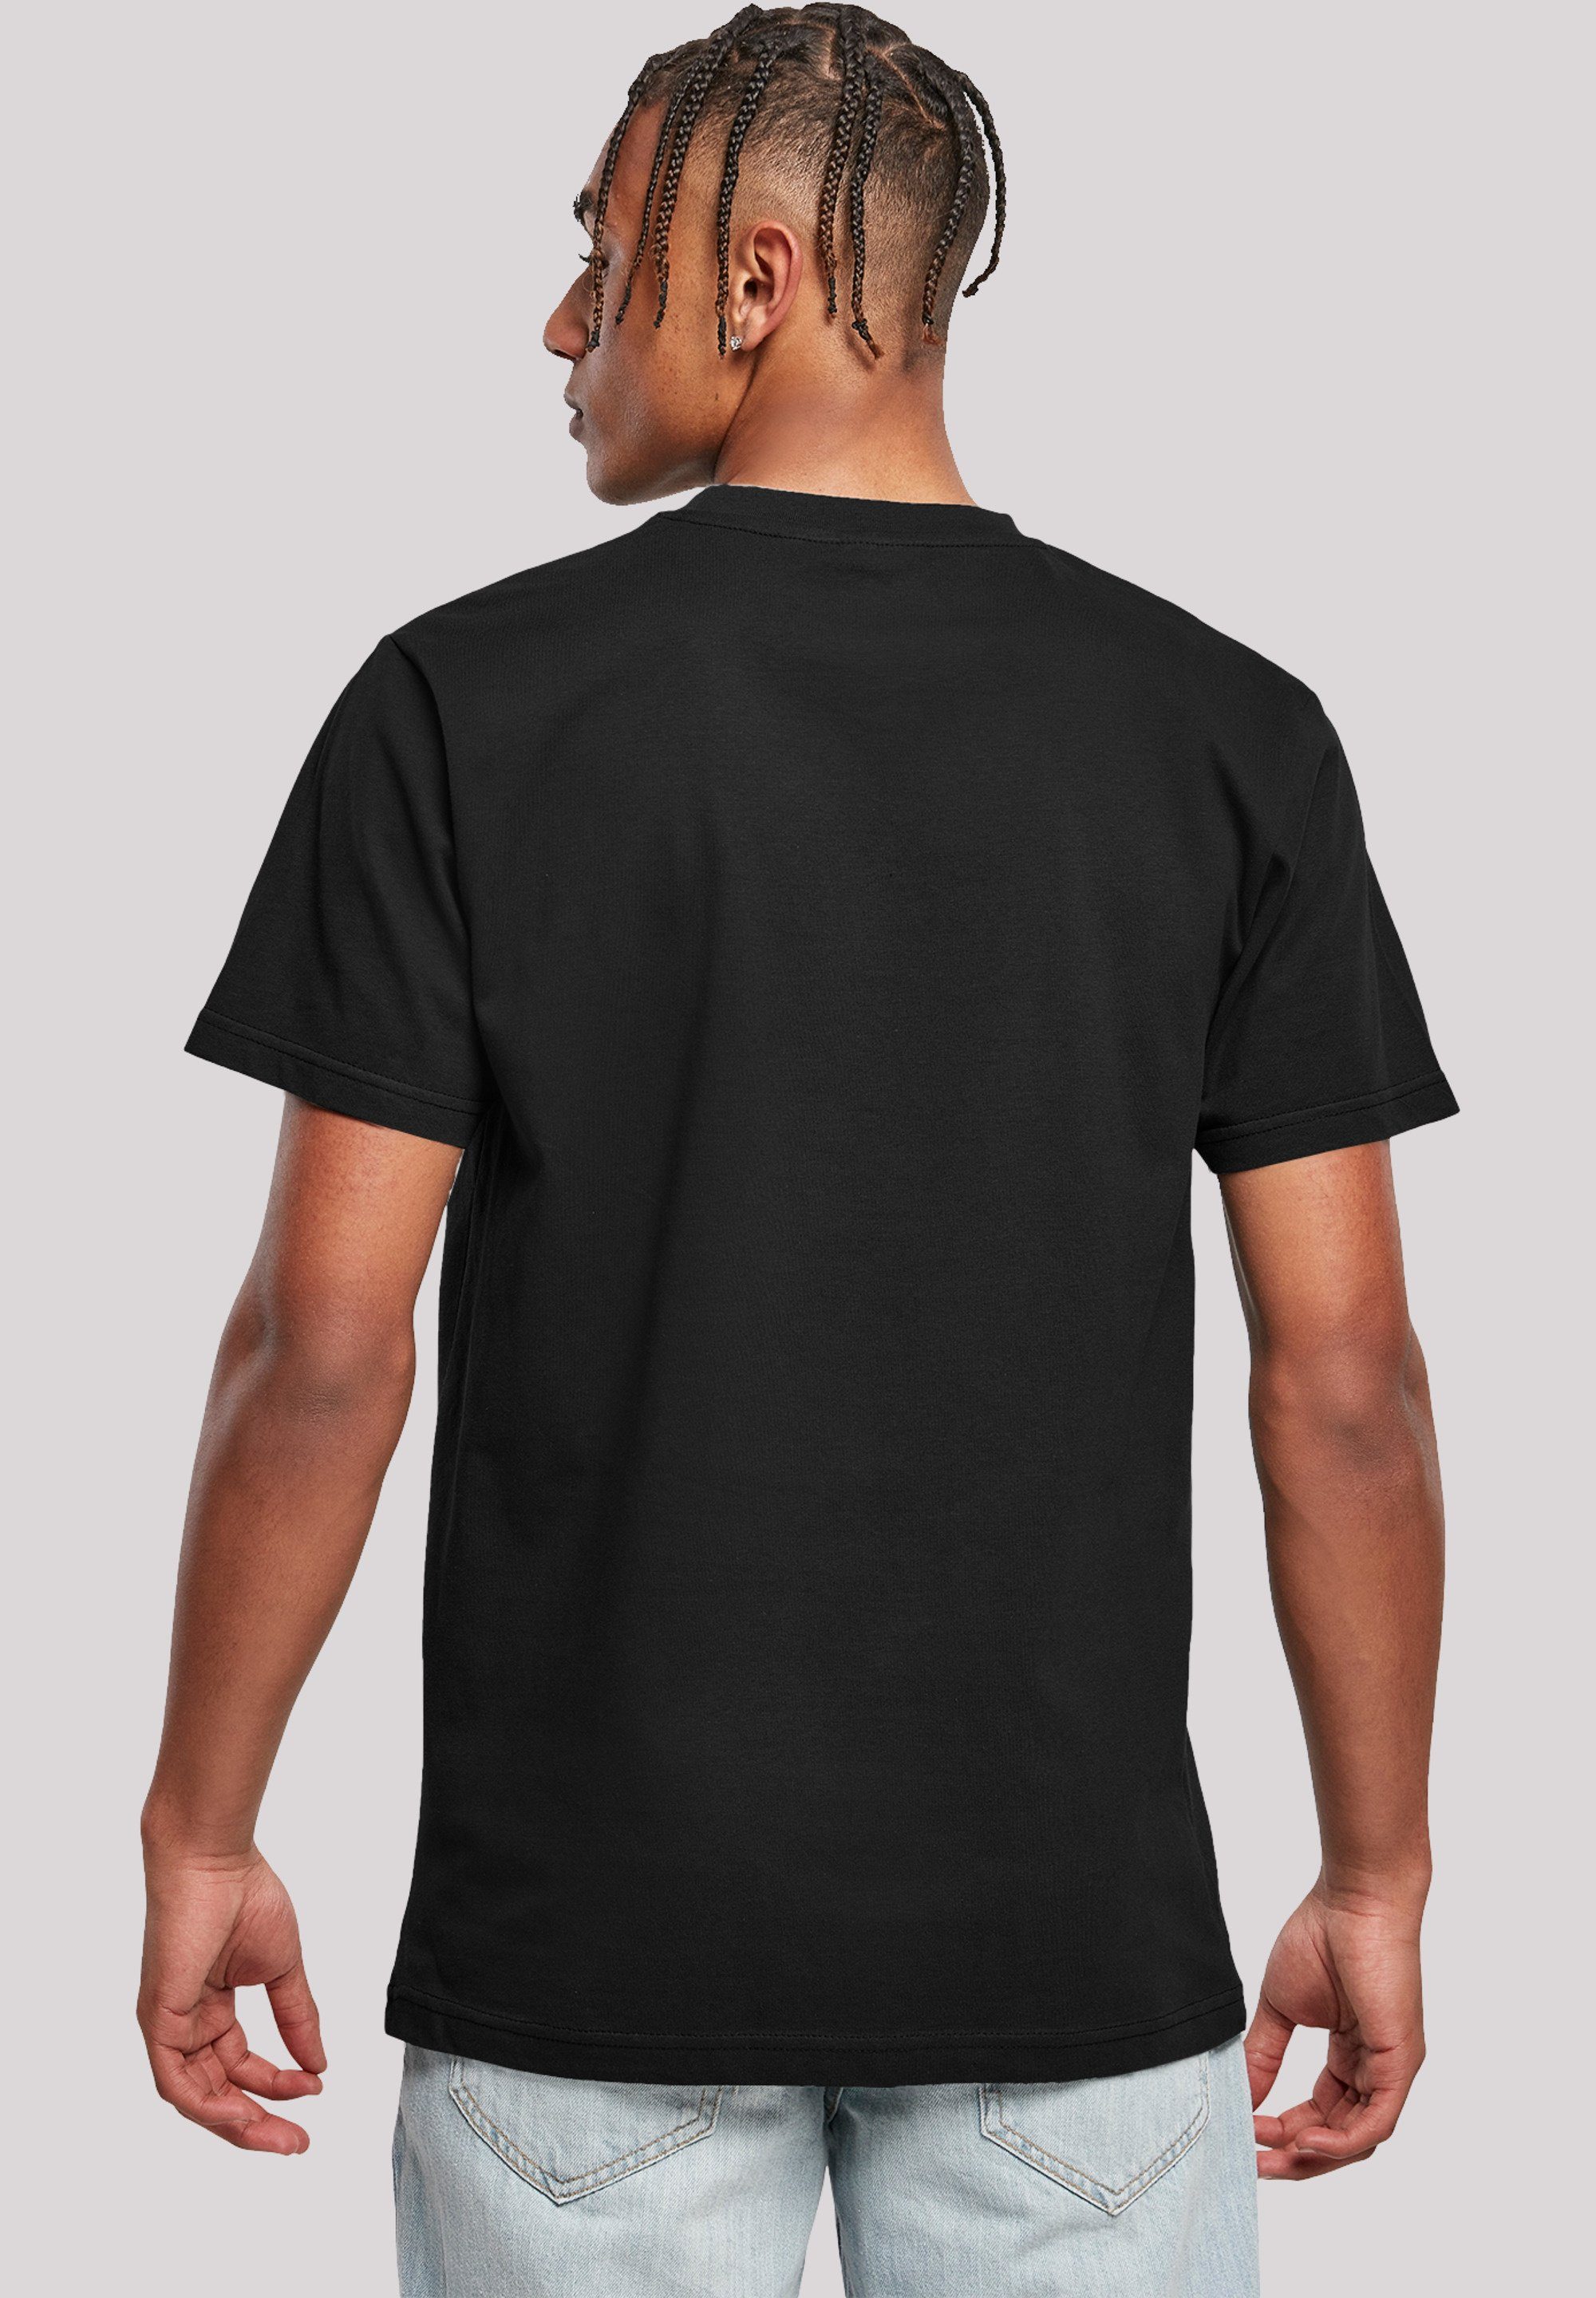 F4NT4STIC T-Shirt Woodstock Brust Logo Print schwarz